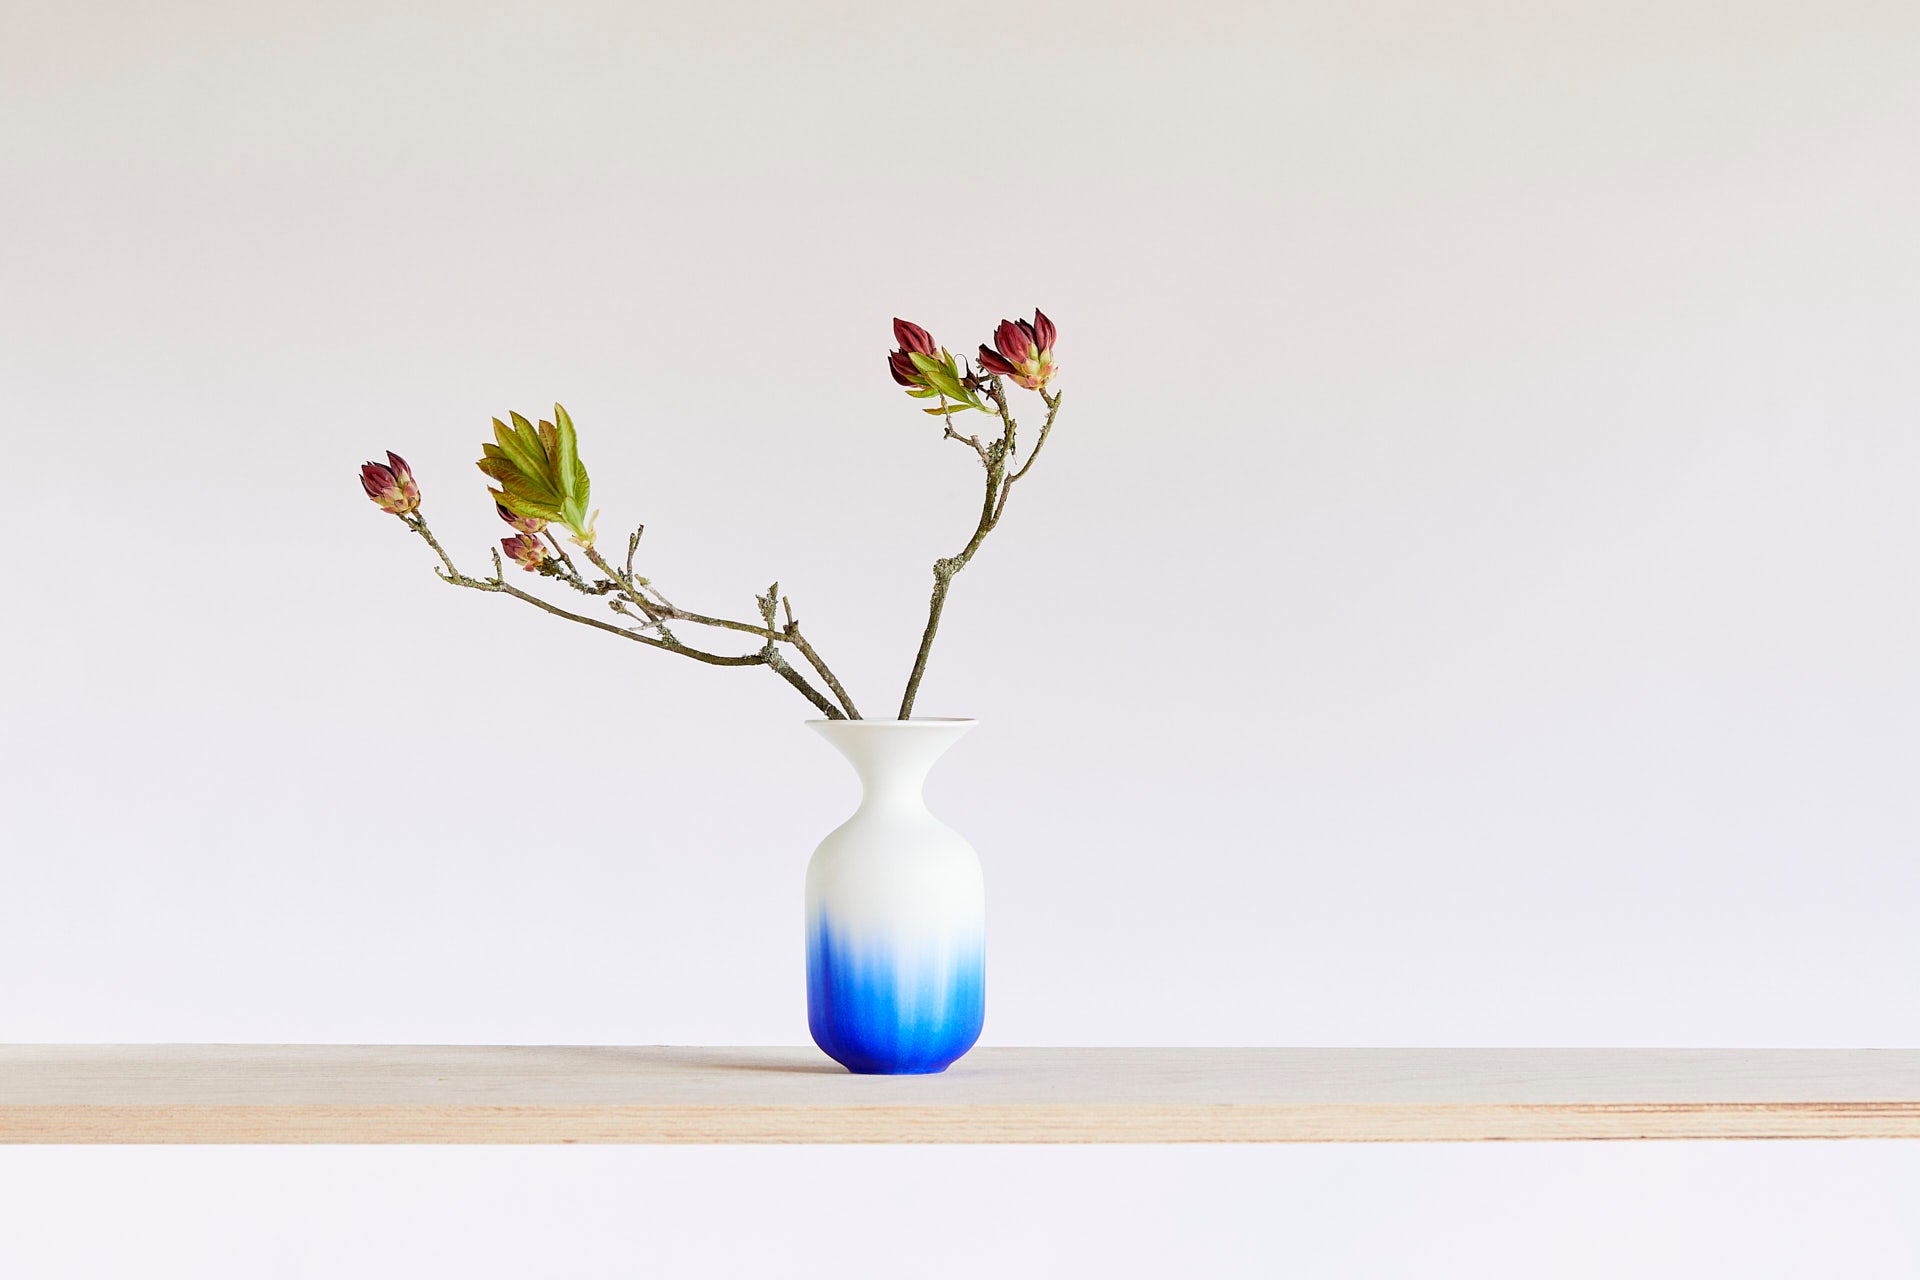 Vibrant blue trumpet vase